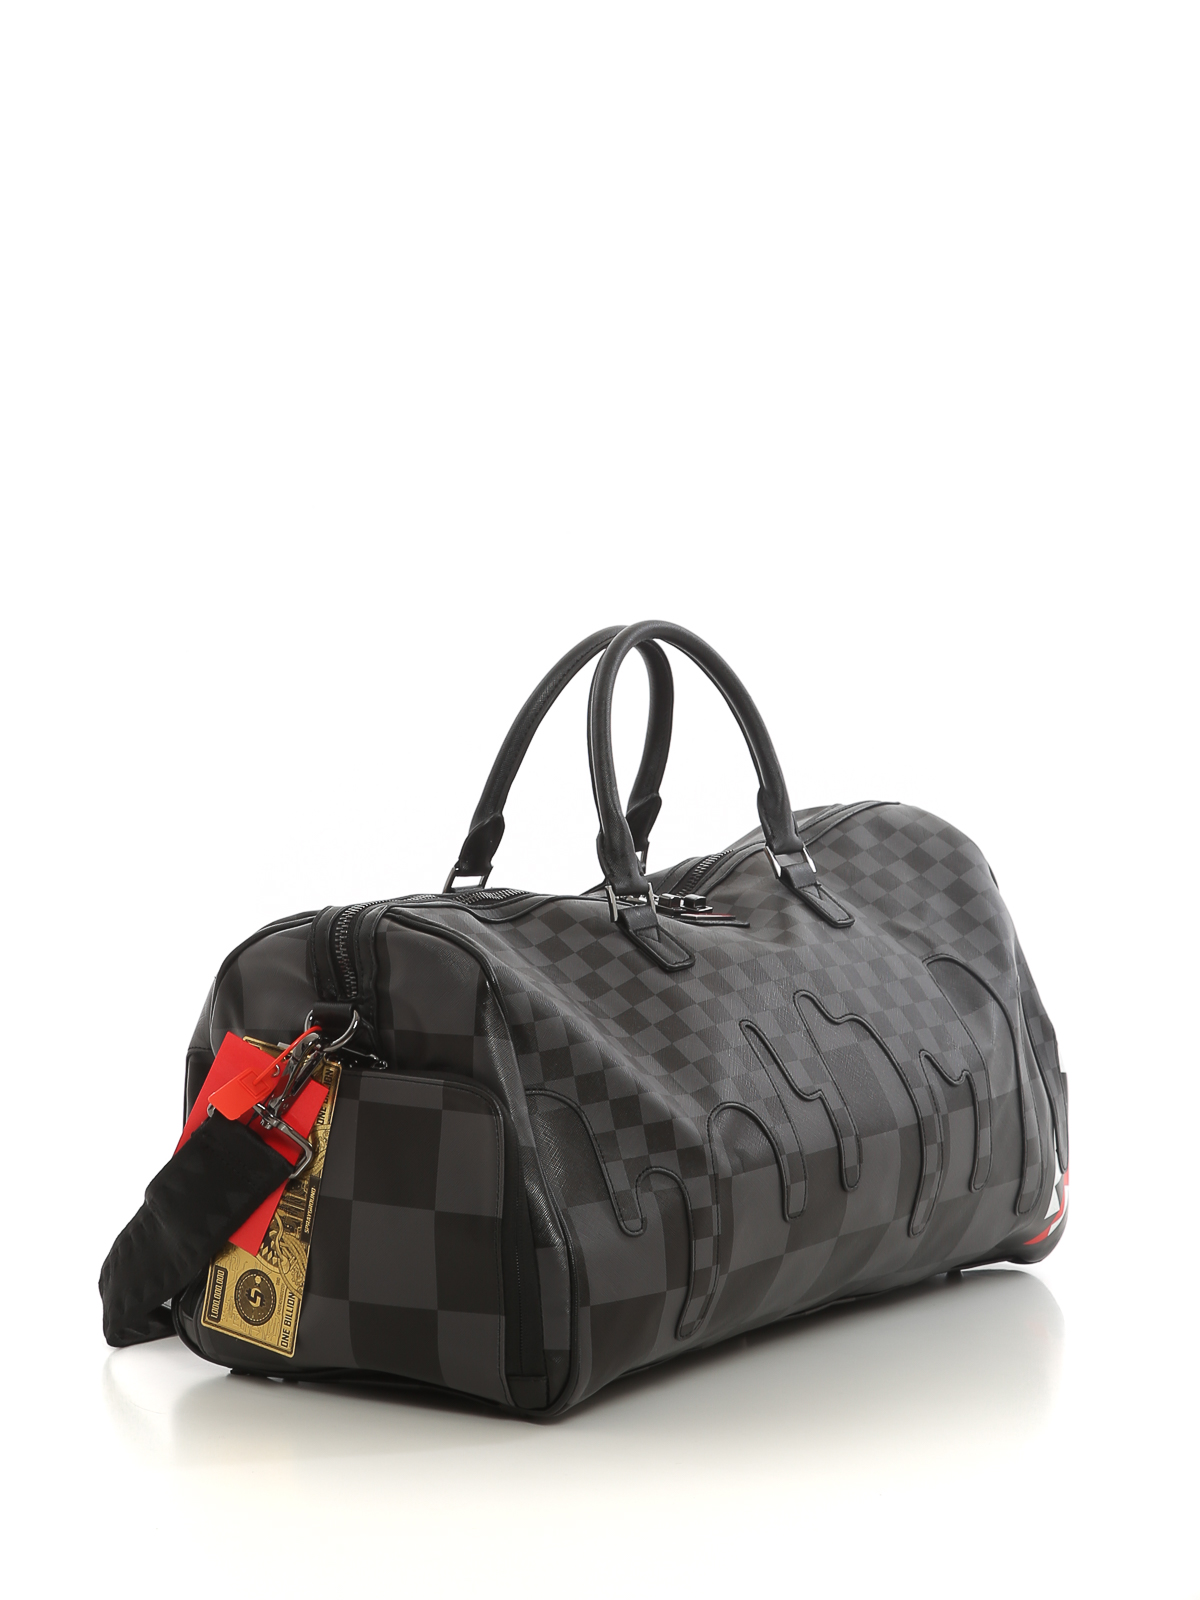 Luggage & Travel bags Sprayground - Double Money duffle bag